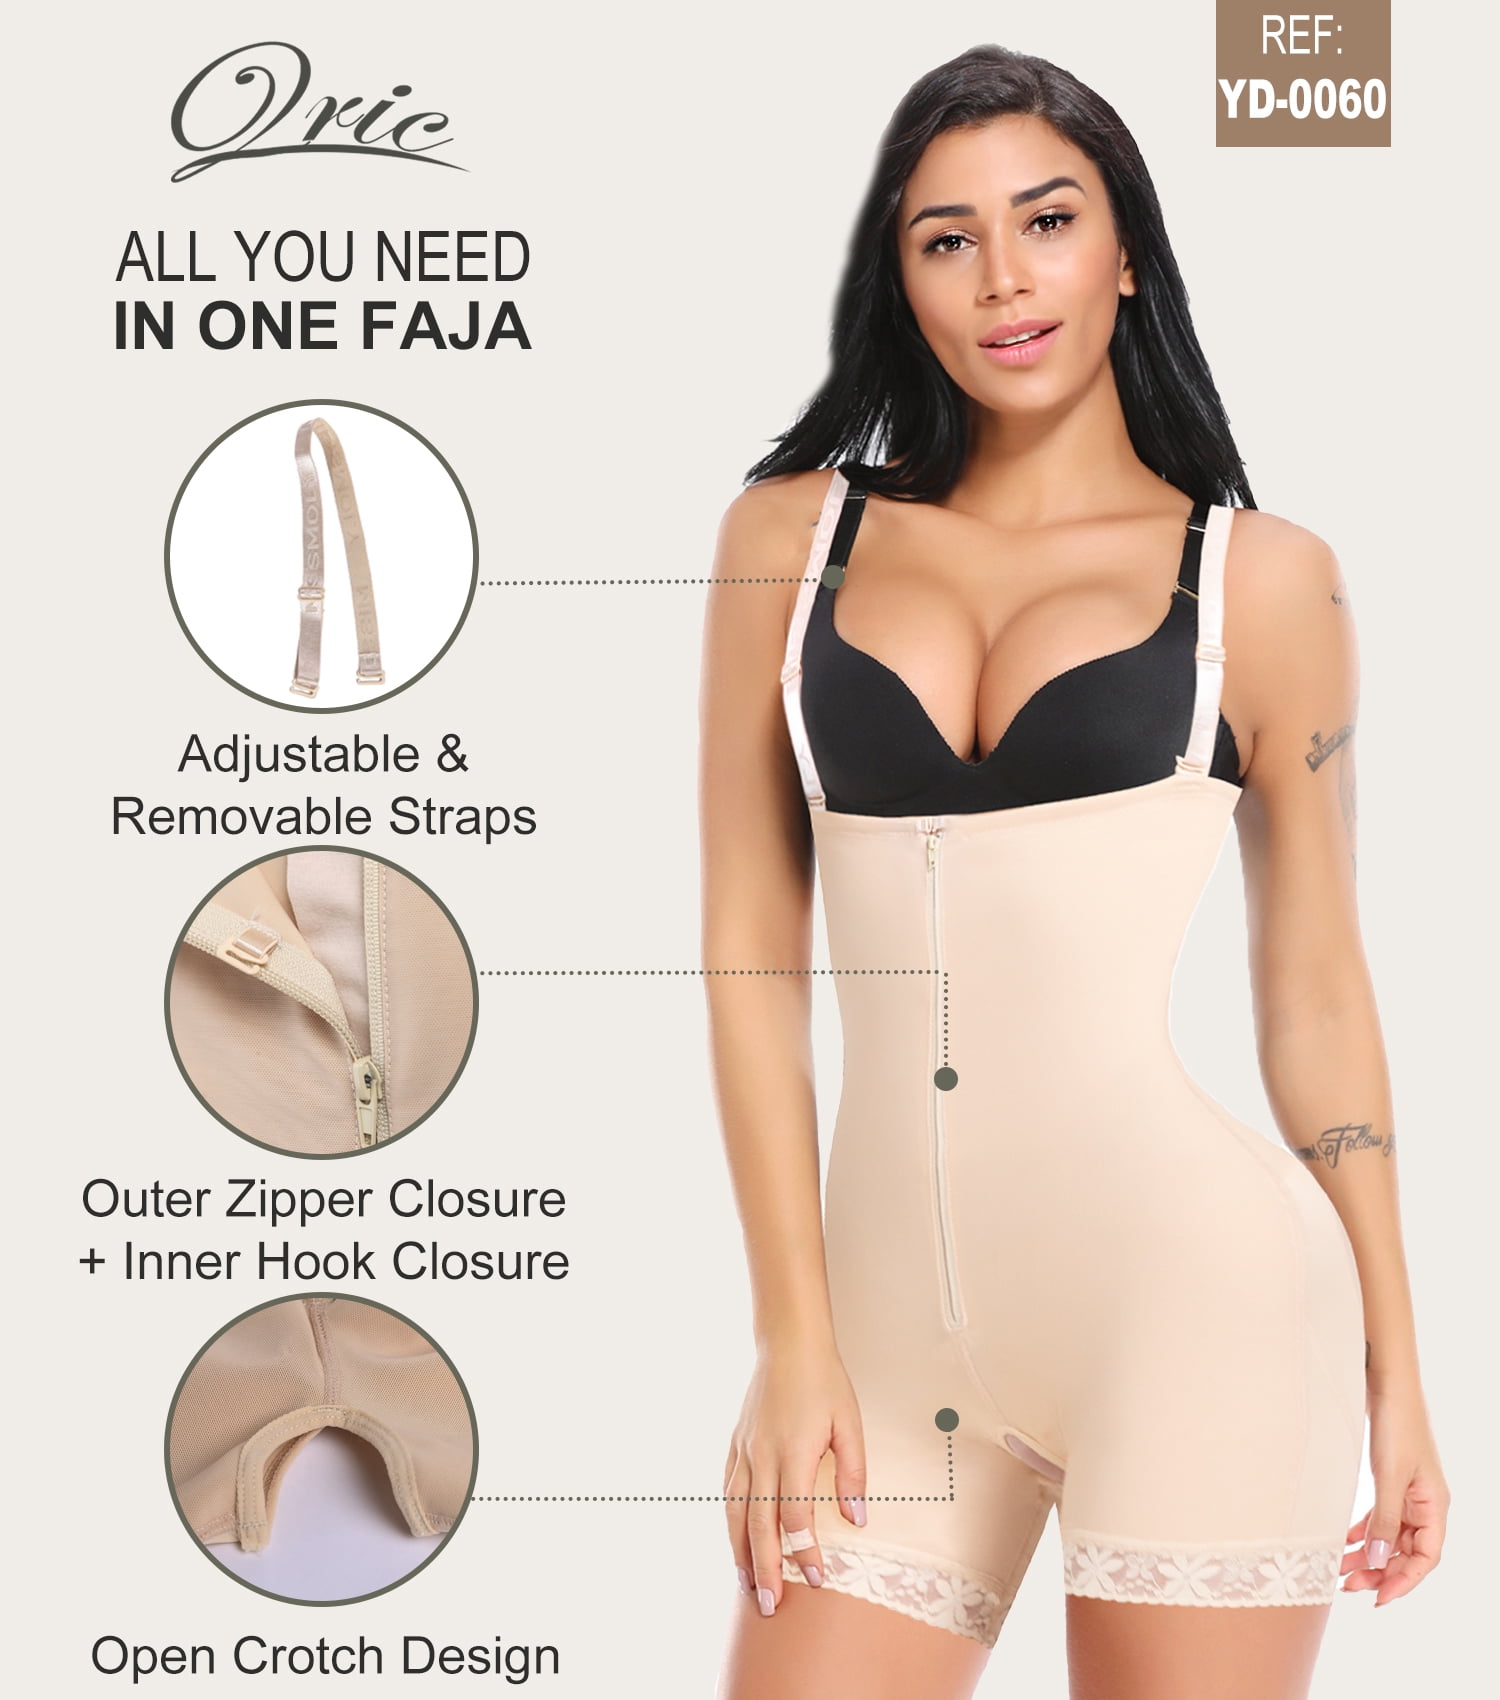 welooc Fajas Colombianas Reductoras Y Moldeadoras Full Girdles Waist Trainer  Bodysuit Body Shaper Shapewear Compression Garment For Women at   Women's Clothing store